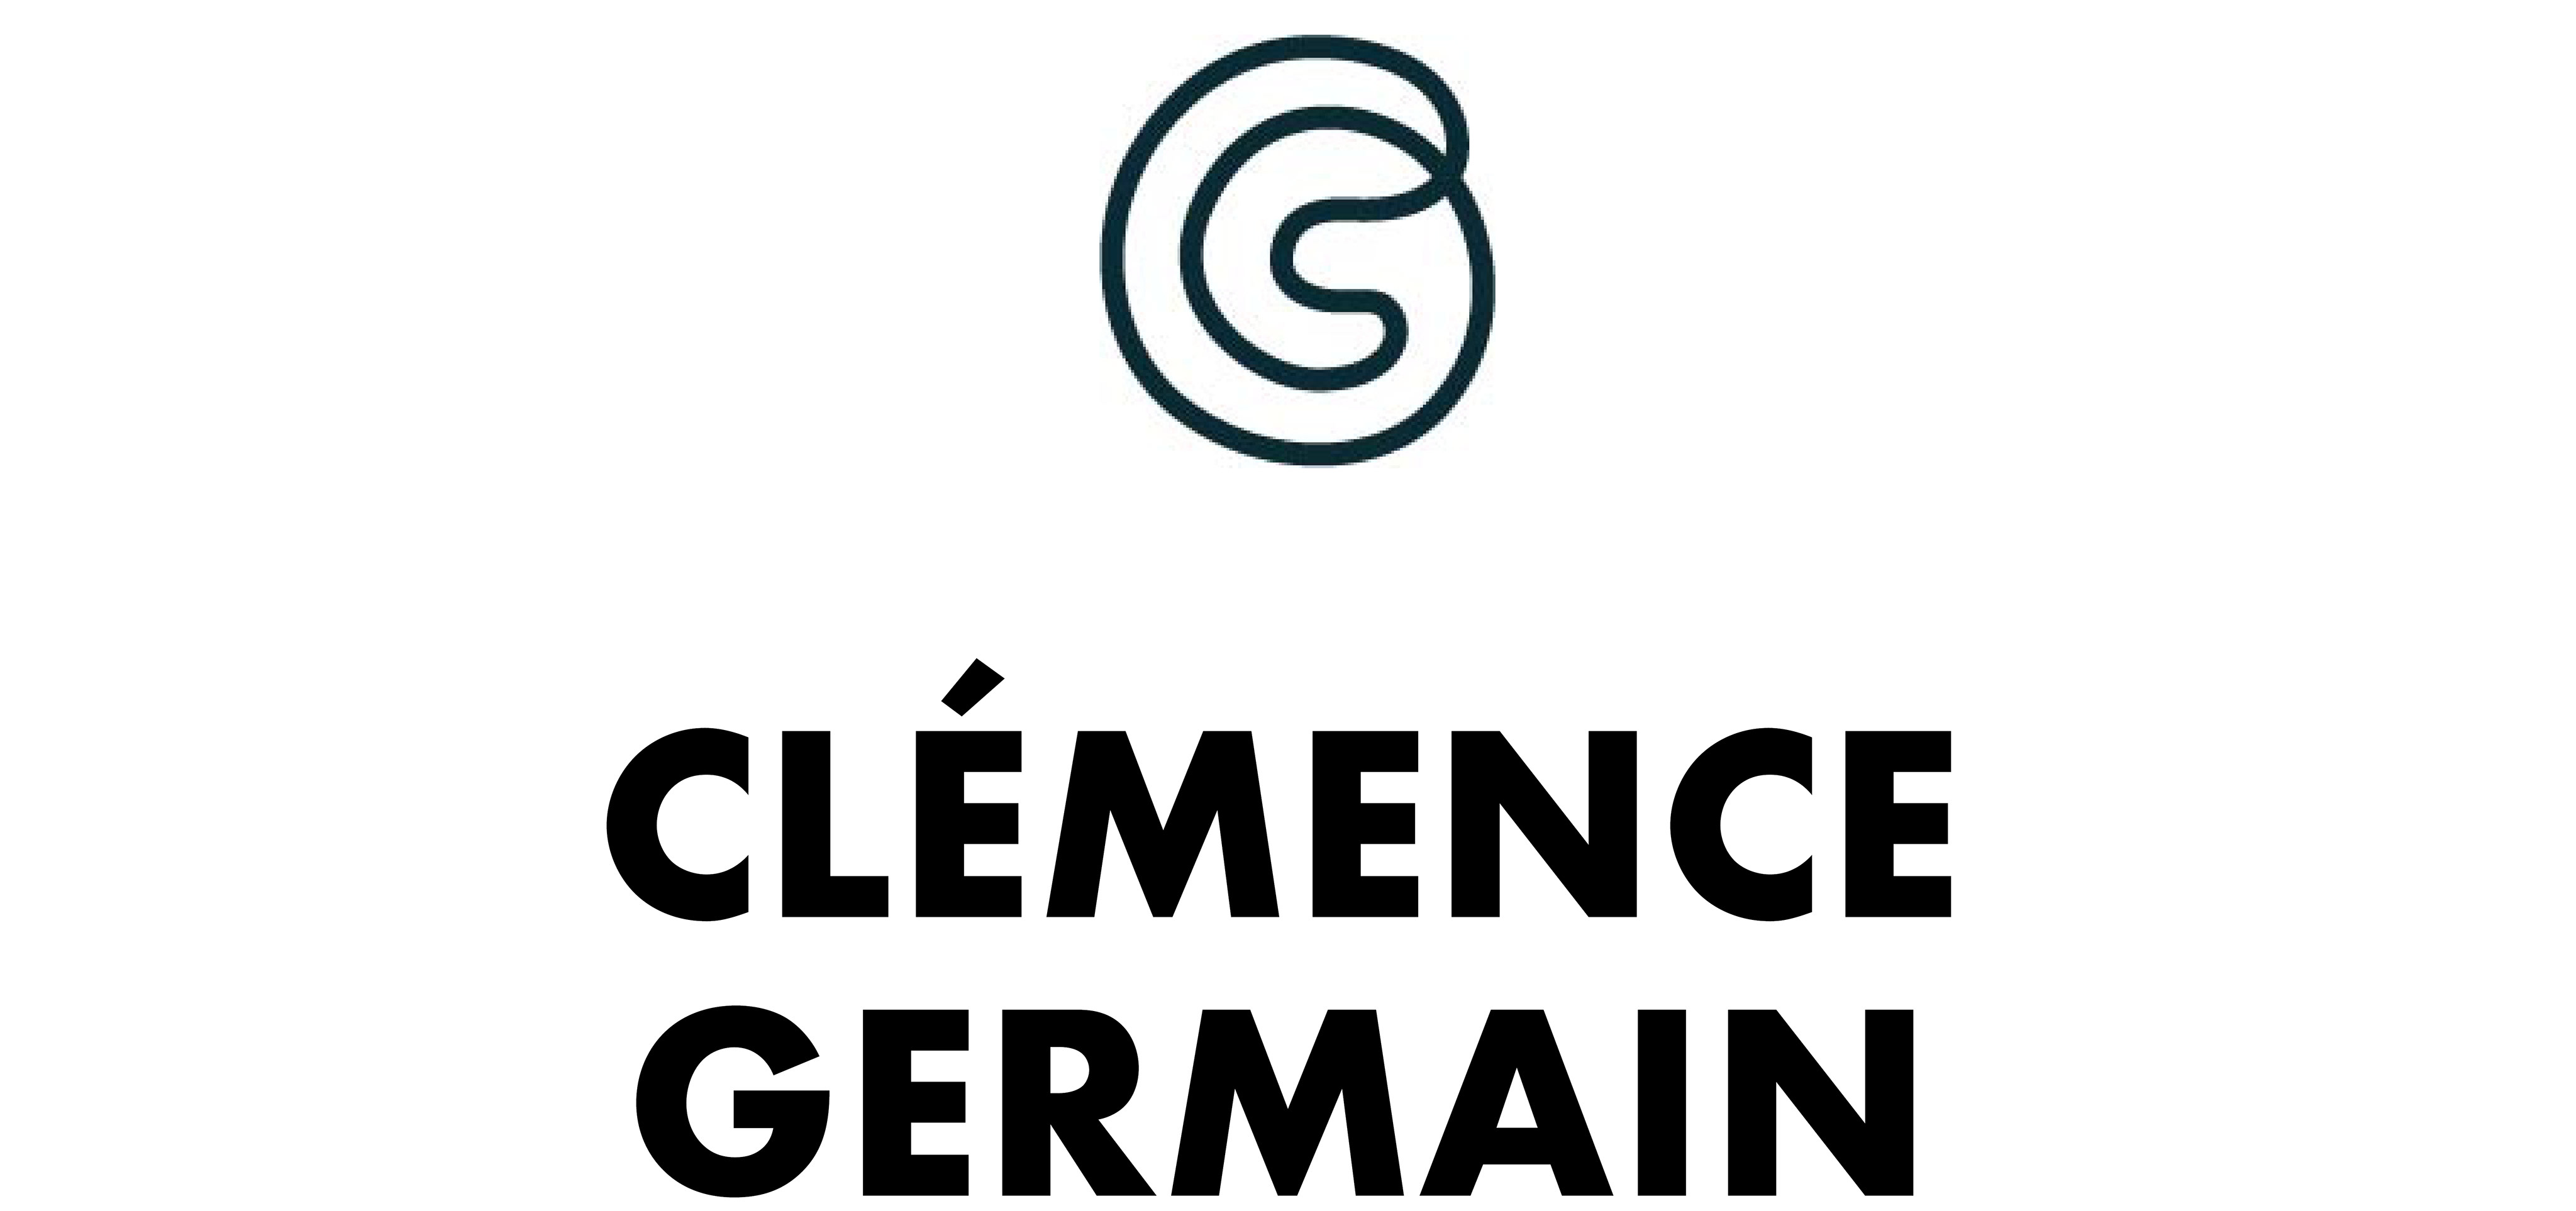 Clemence Germain